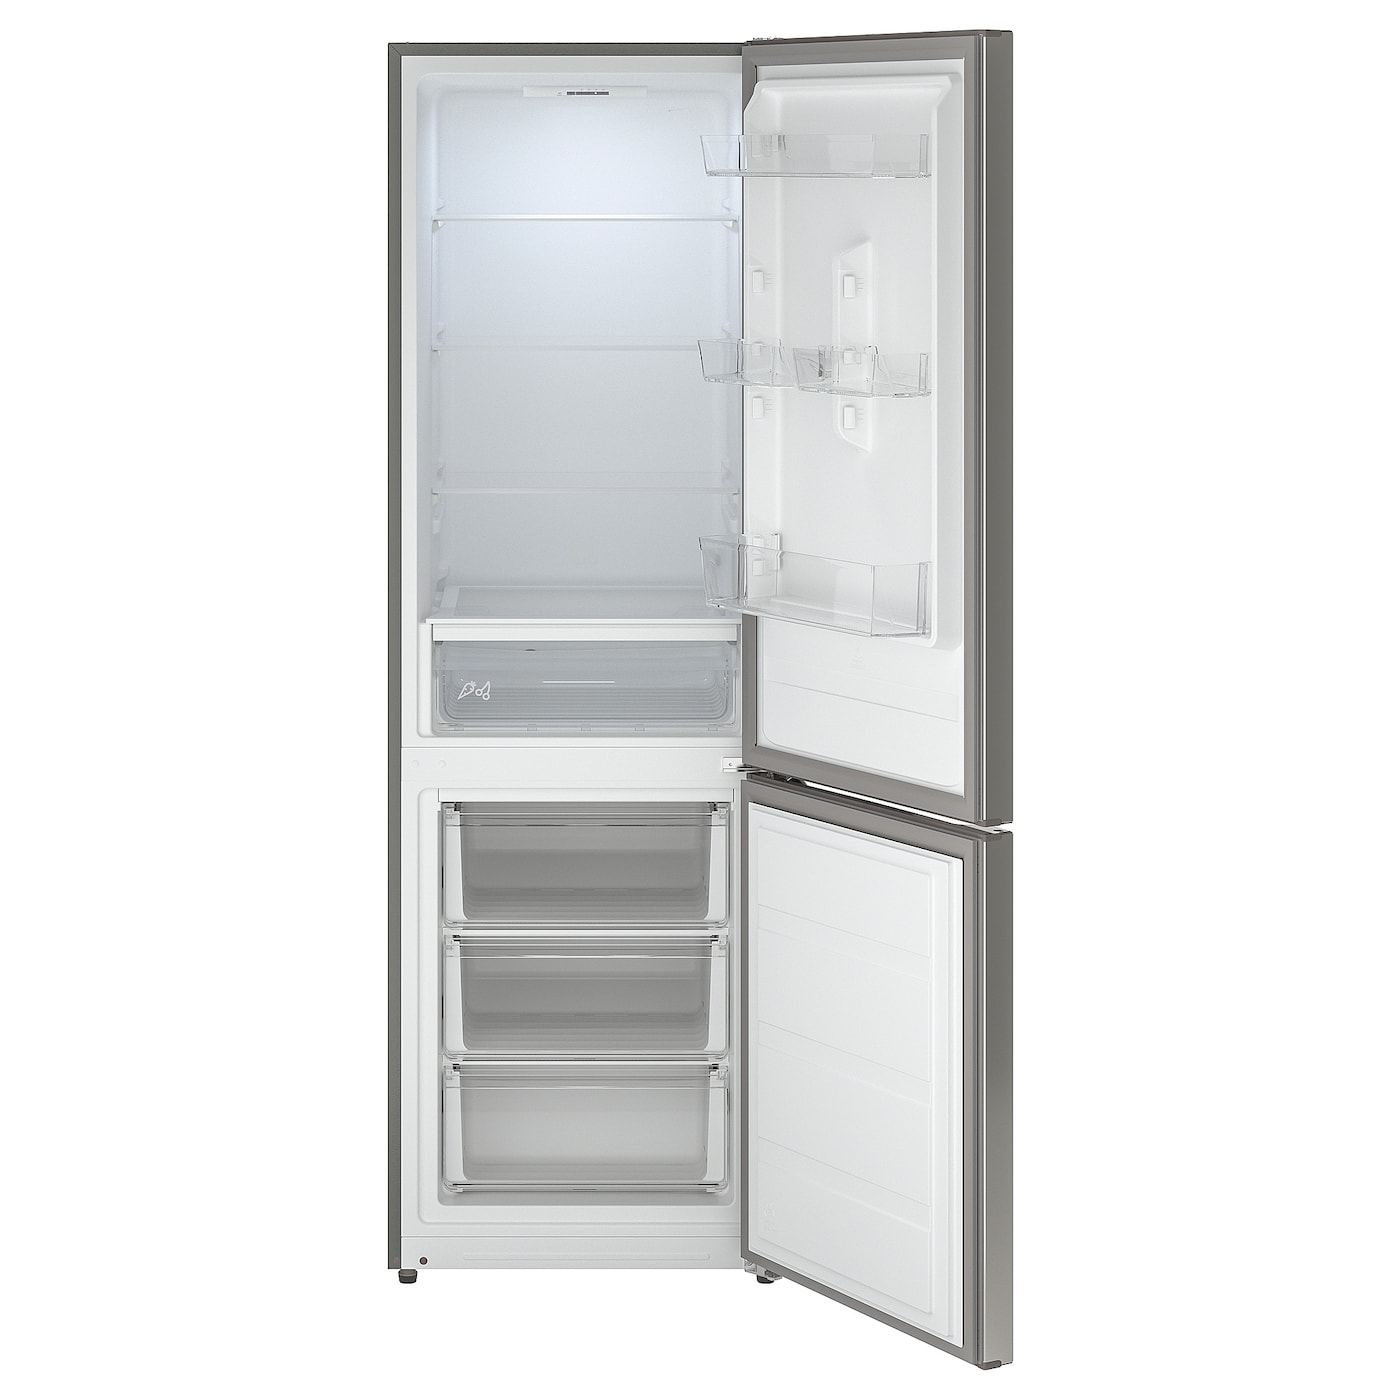 Холодильник бирюса 880nf. Холодильник Бирюса w880nf. Холодильник Бирюса 840nf. Бирюса 880nf. Бирюса 880 NF inox.